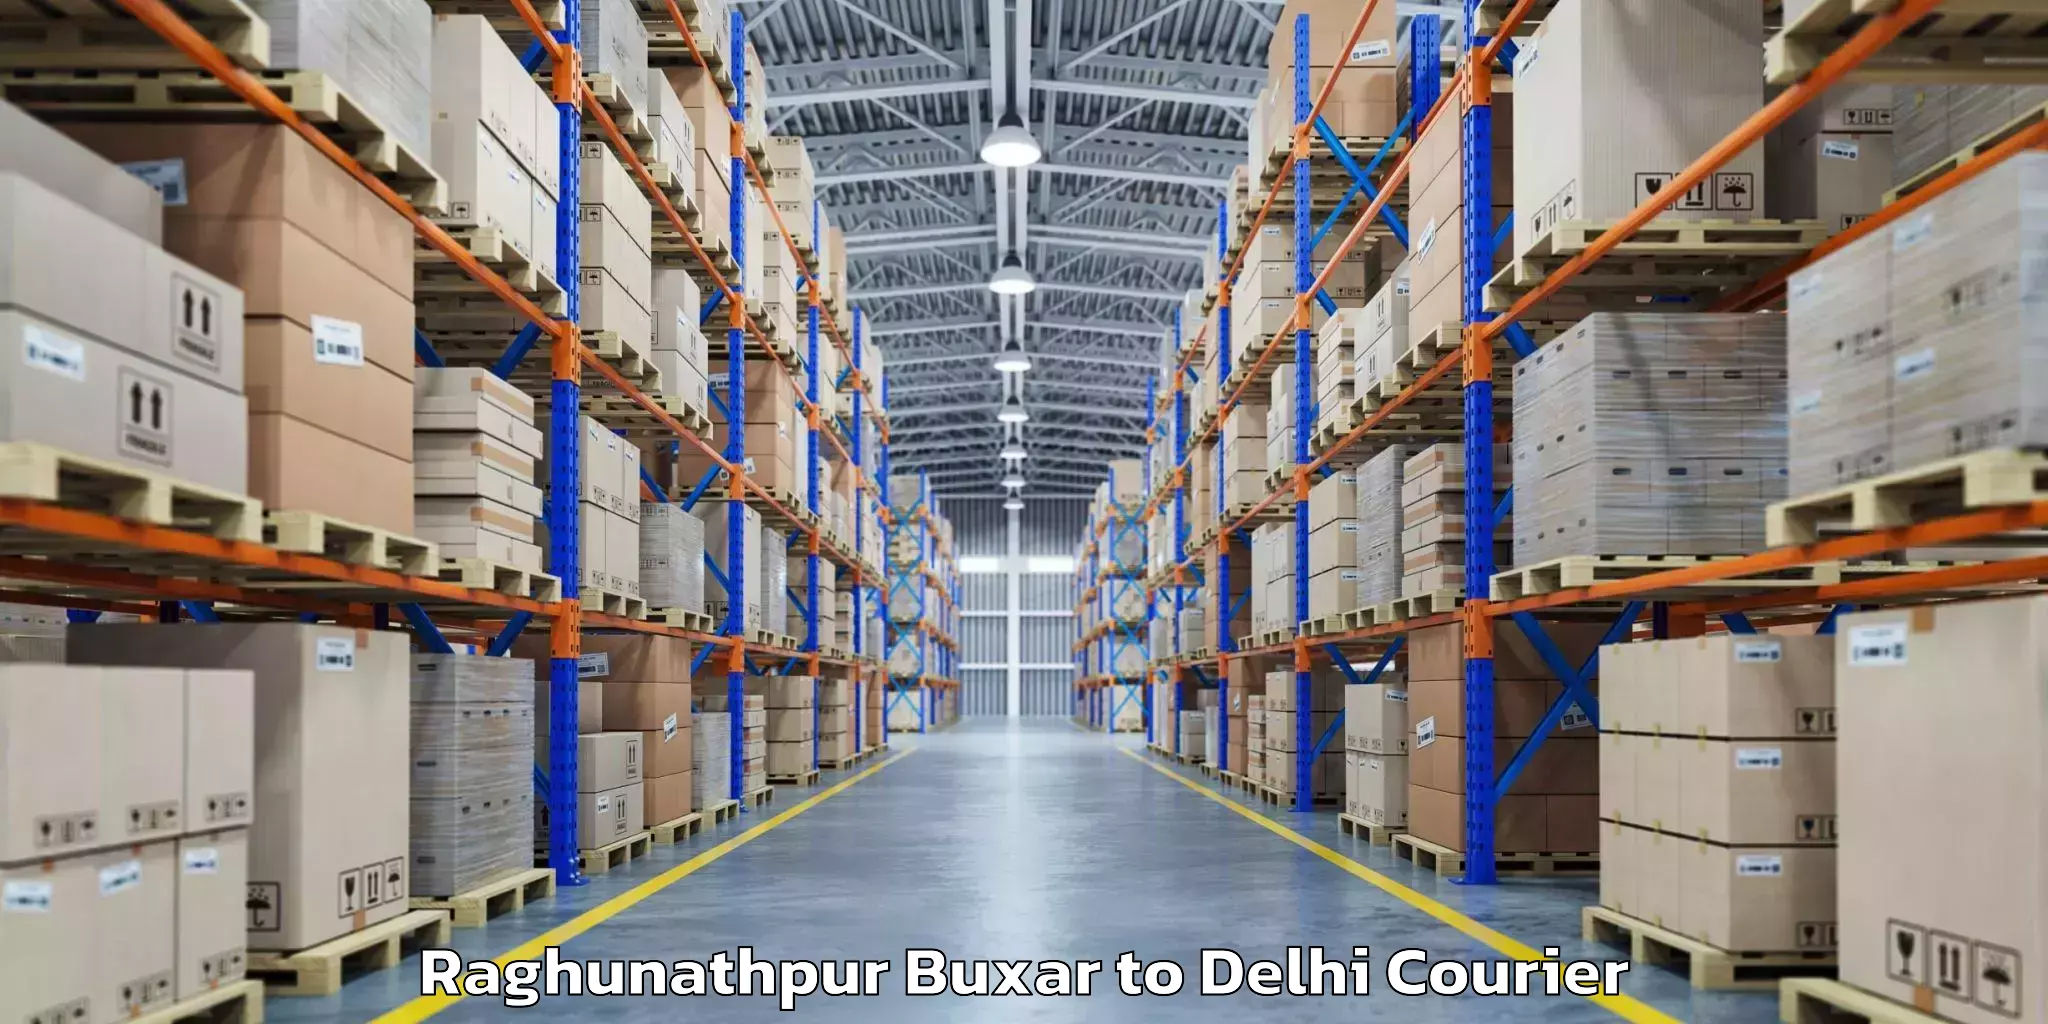 Luggage shipment specialists Raghunathpur Buxar to University of Delhi